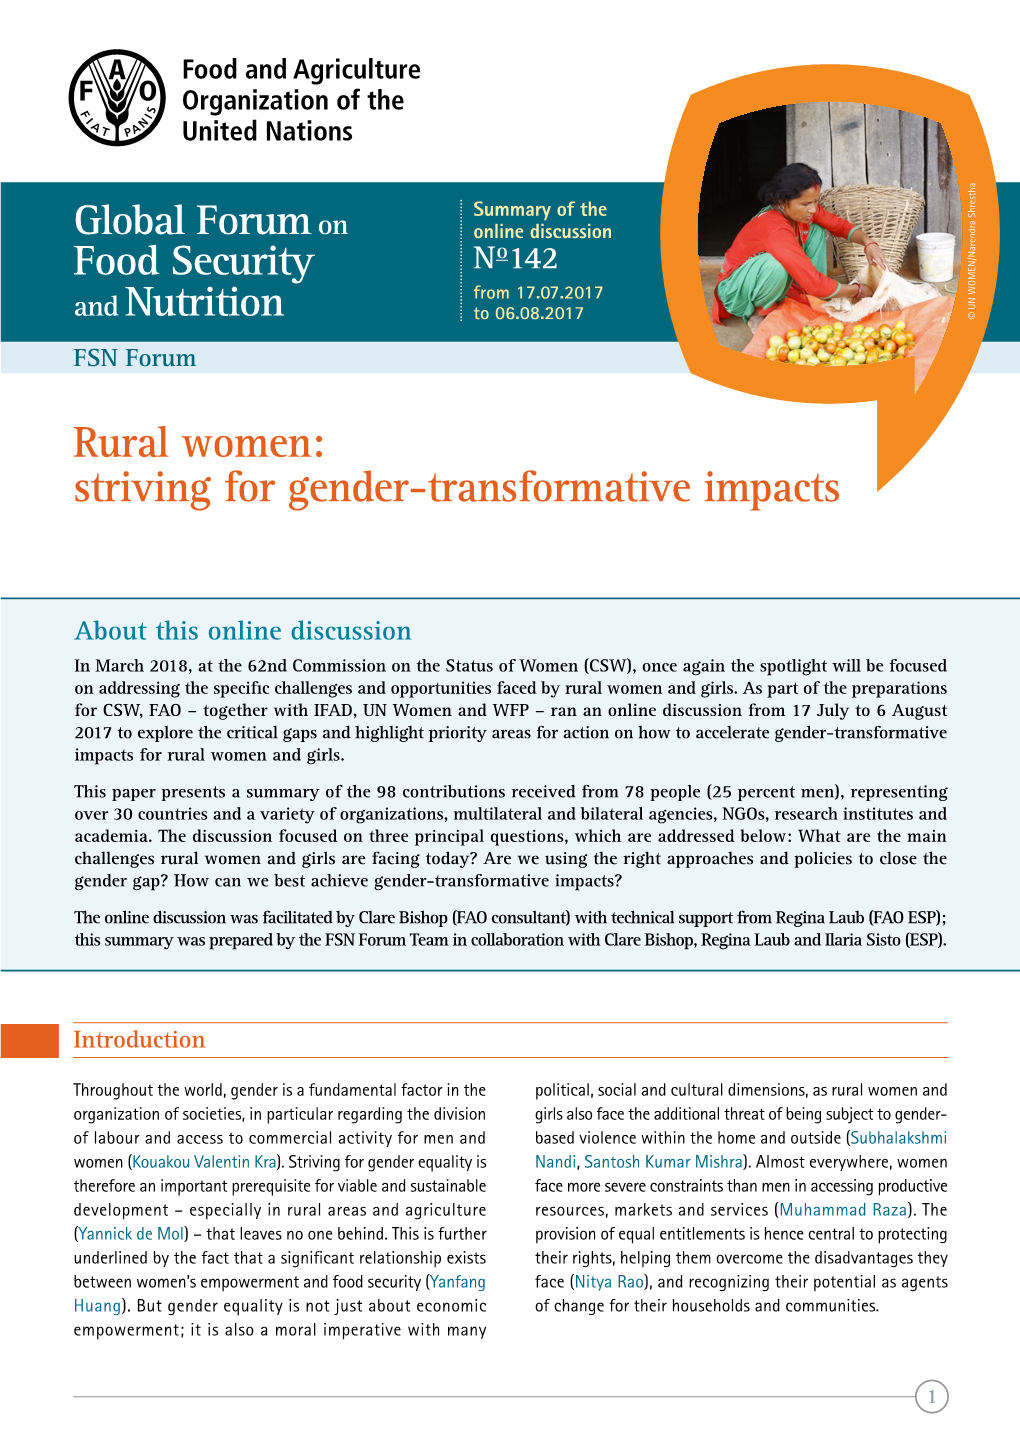 Rural Women: Striving for Gender Transformative Impacts